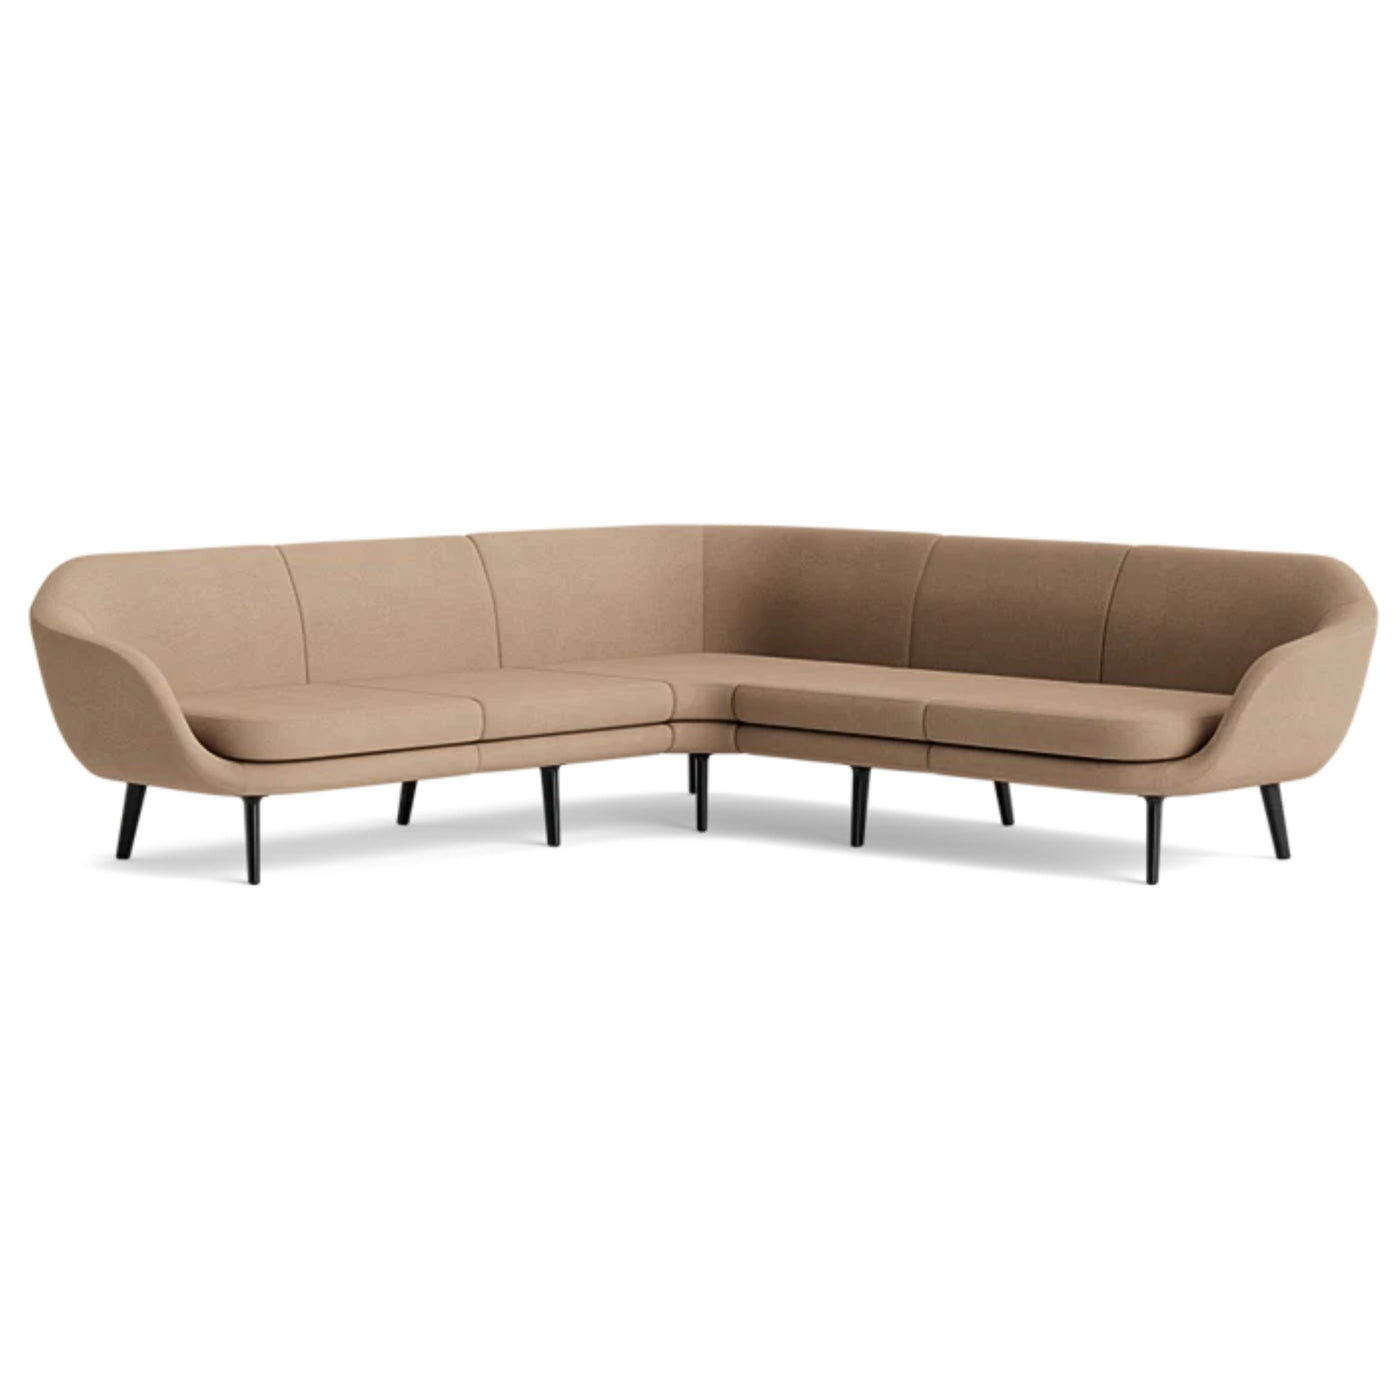 Normann Copenhagen Sum Modular Corner Sofa at someday designs. #colour_hallingdal-224